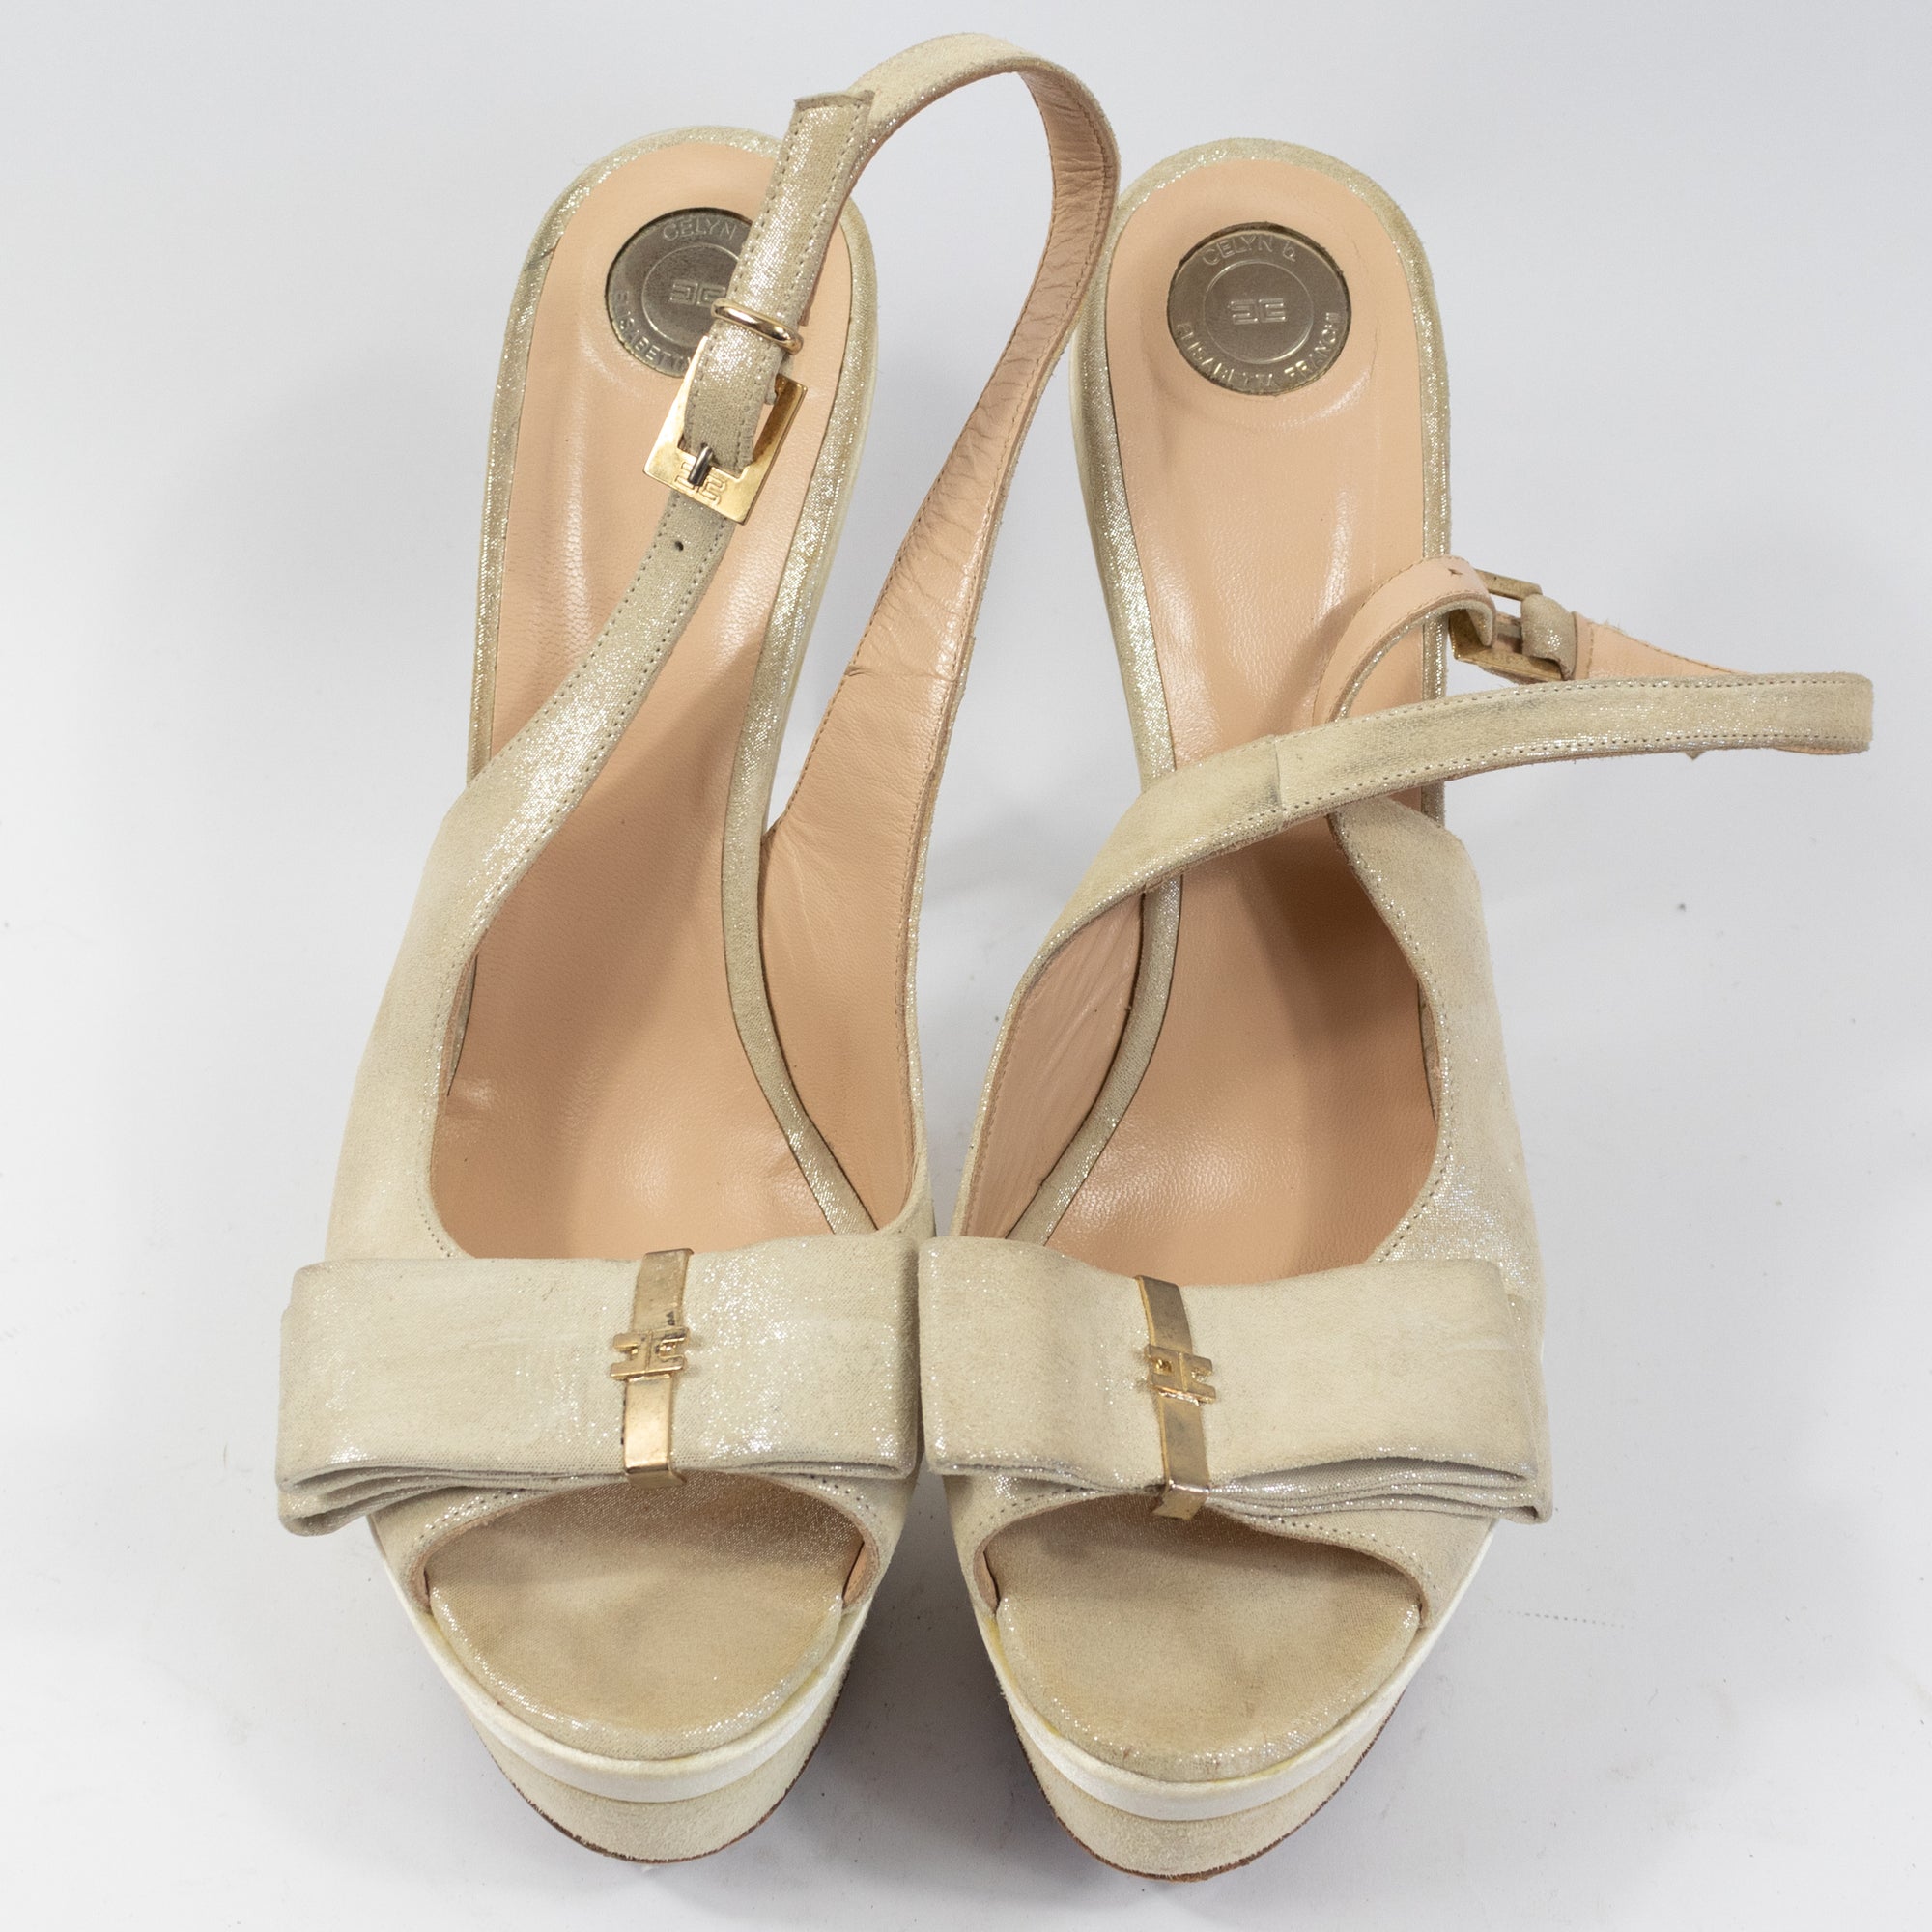 Elisabetta Franchi sandals